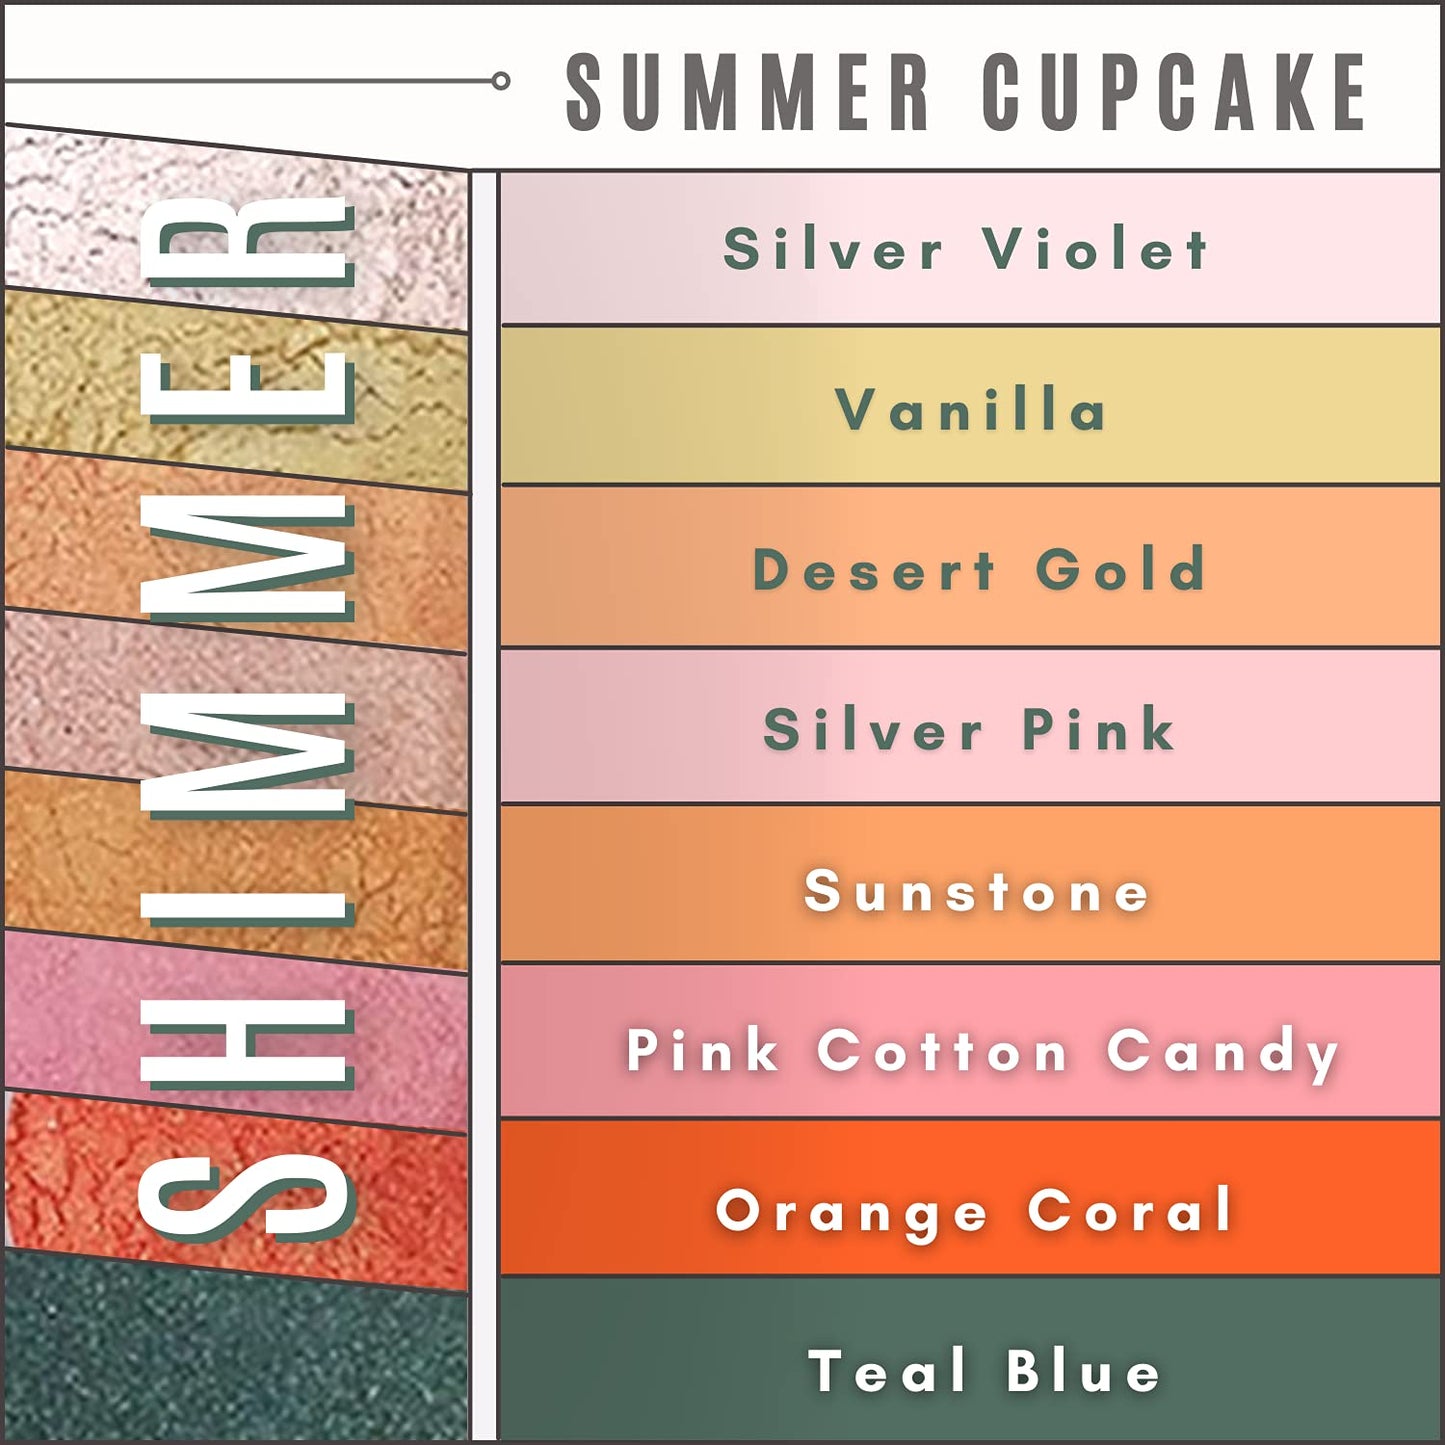 Summer Cupcake